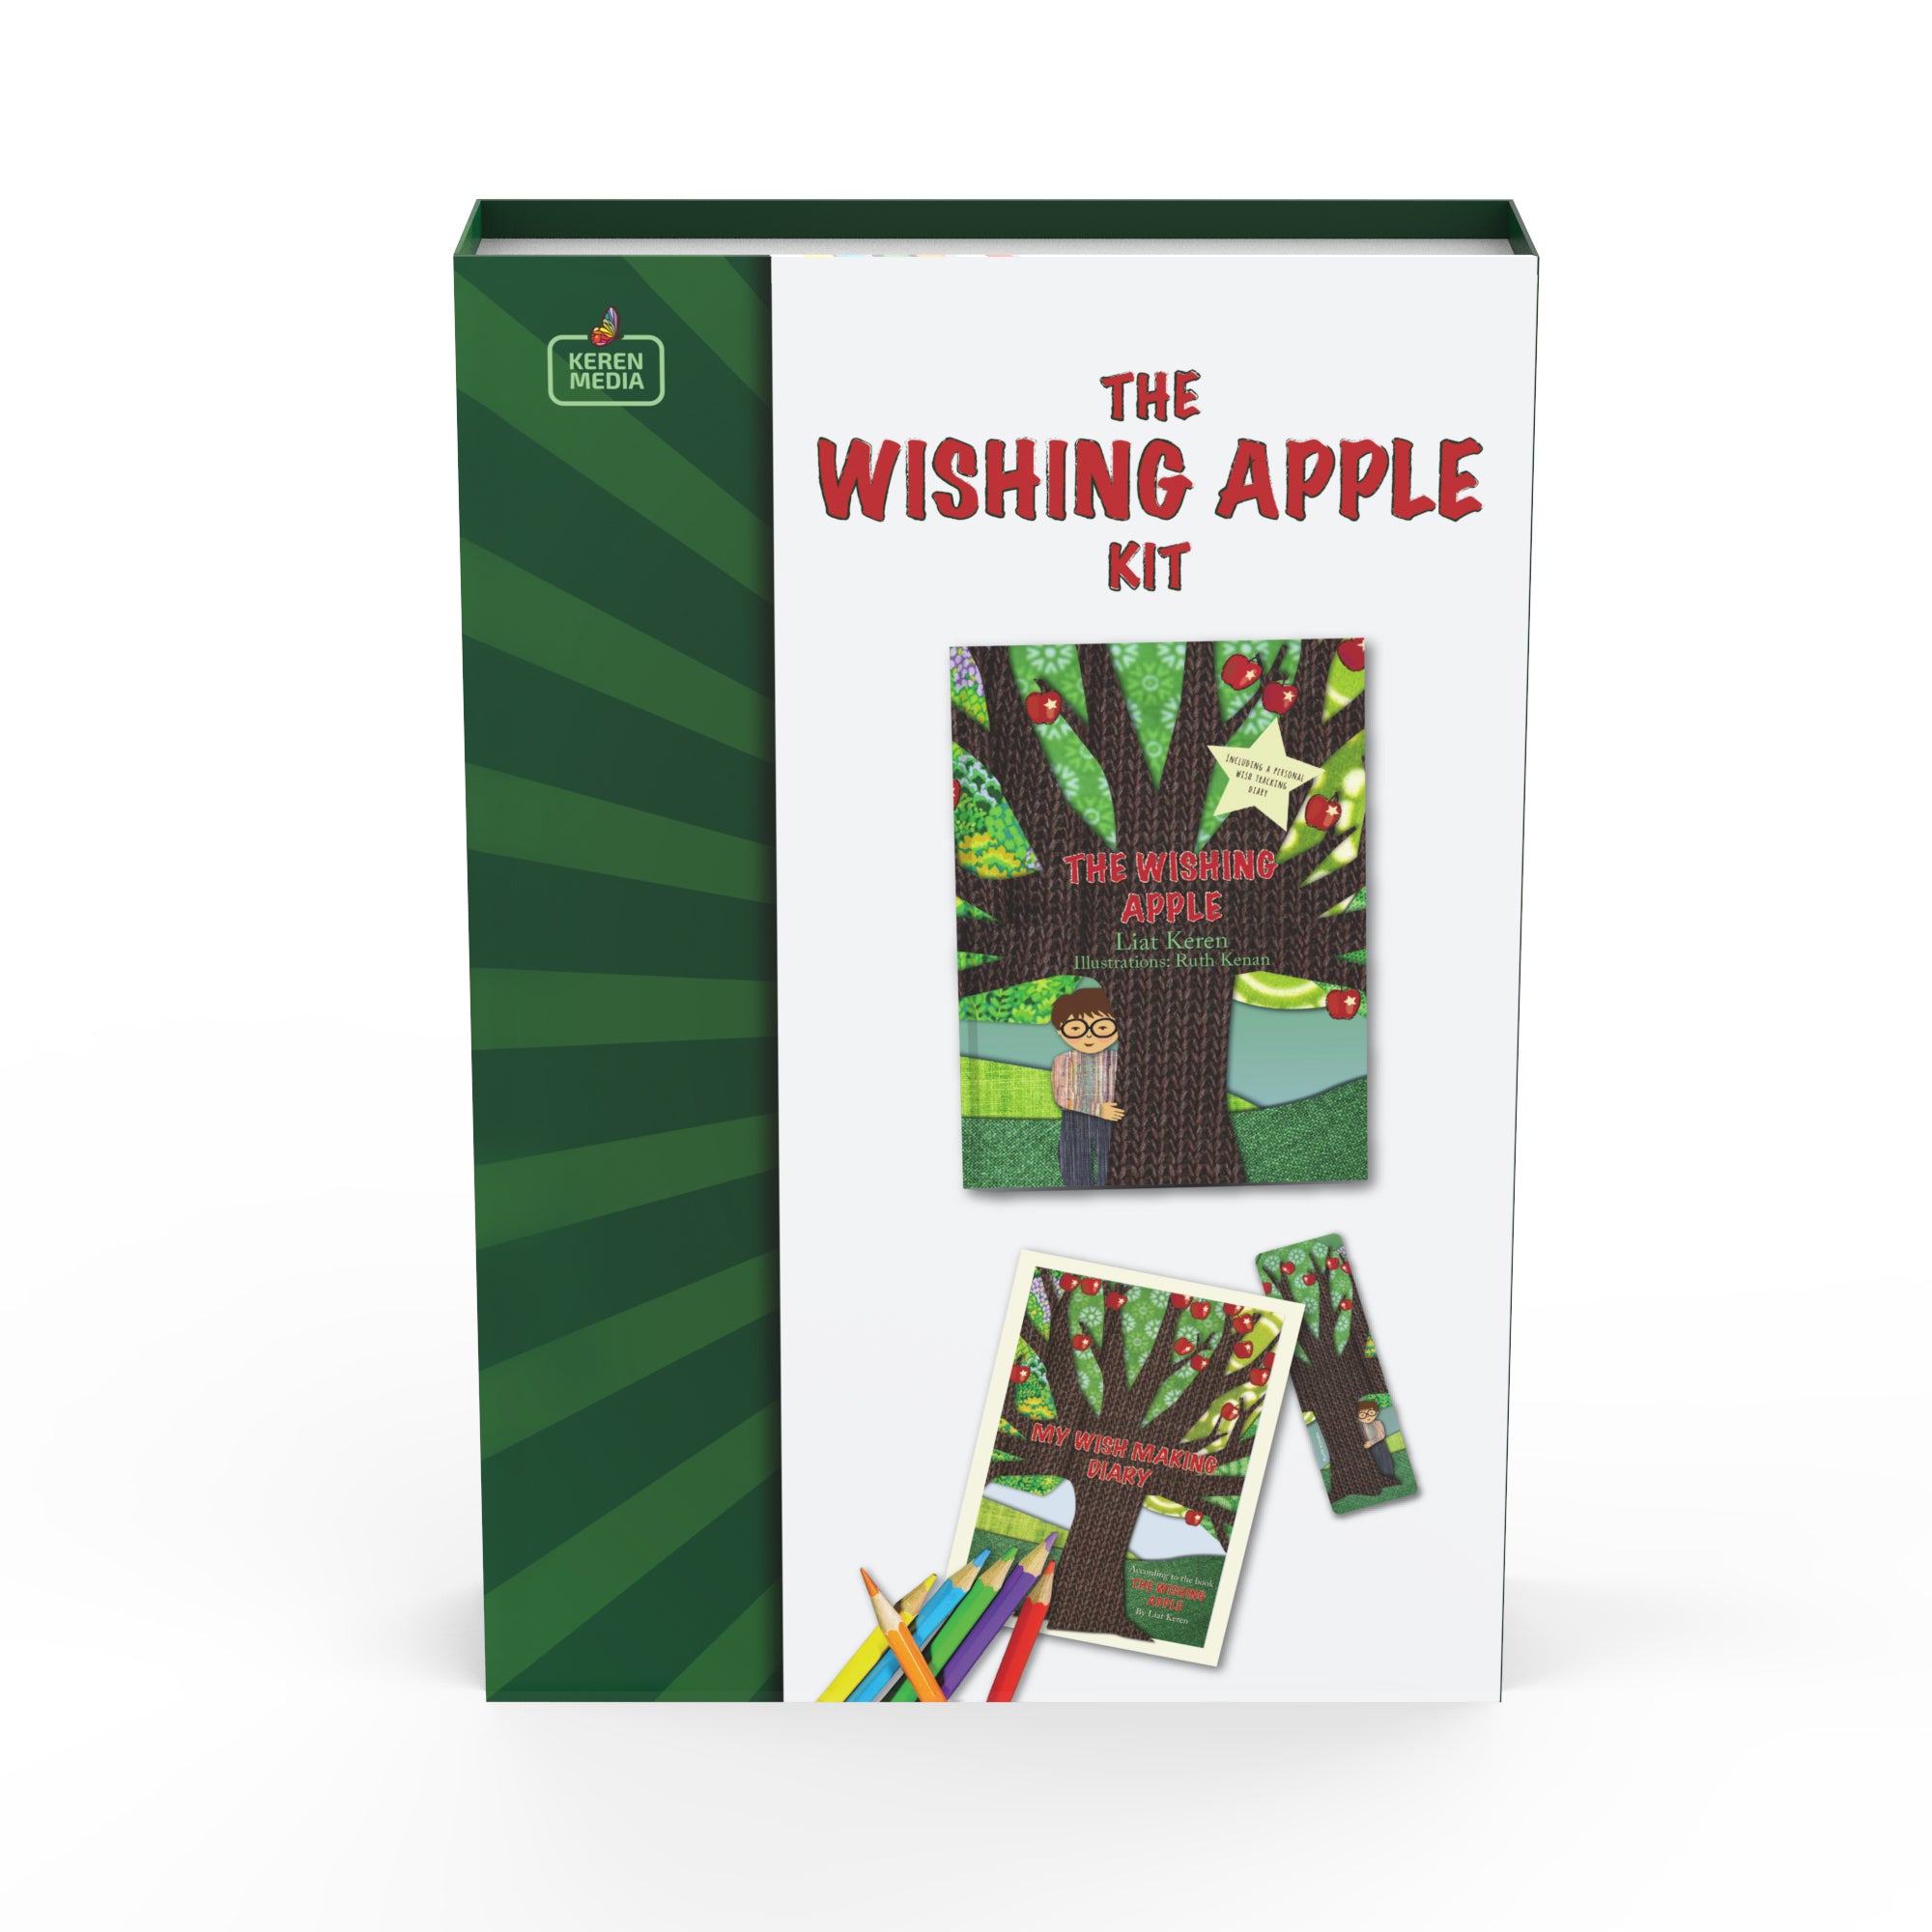 The Wishing Apple Kit